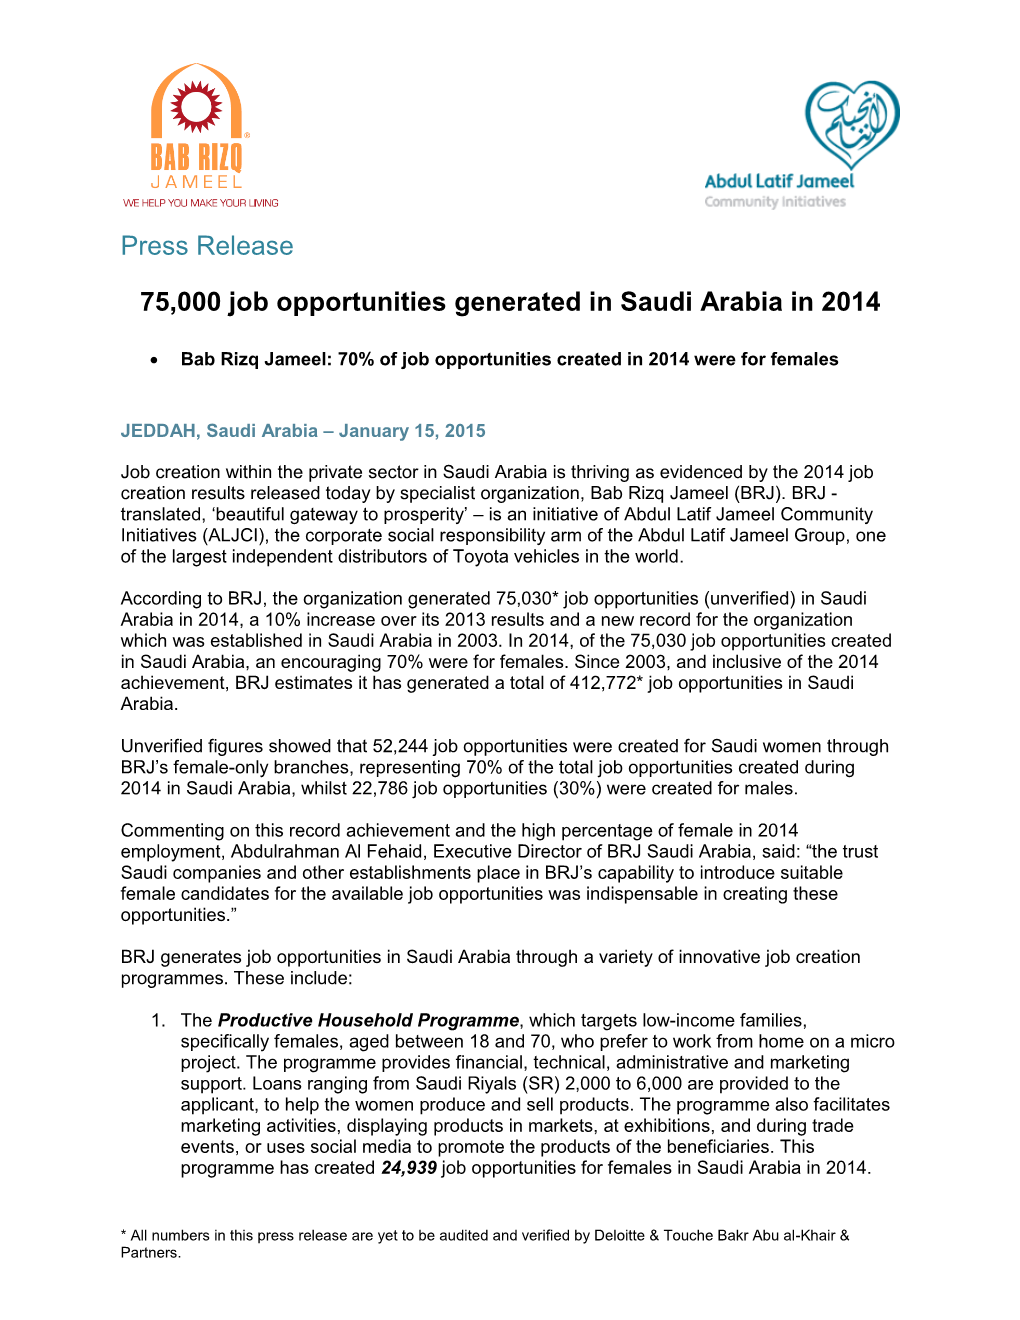 Press Release 75,000 Job Opportunities Generated in Saudi Arabia in 2014